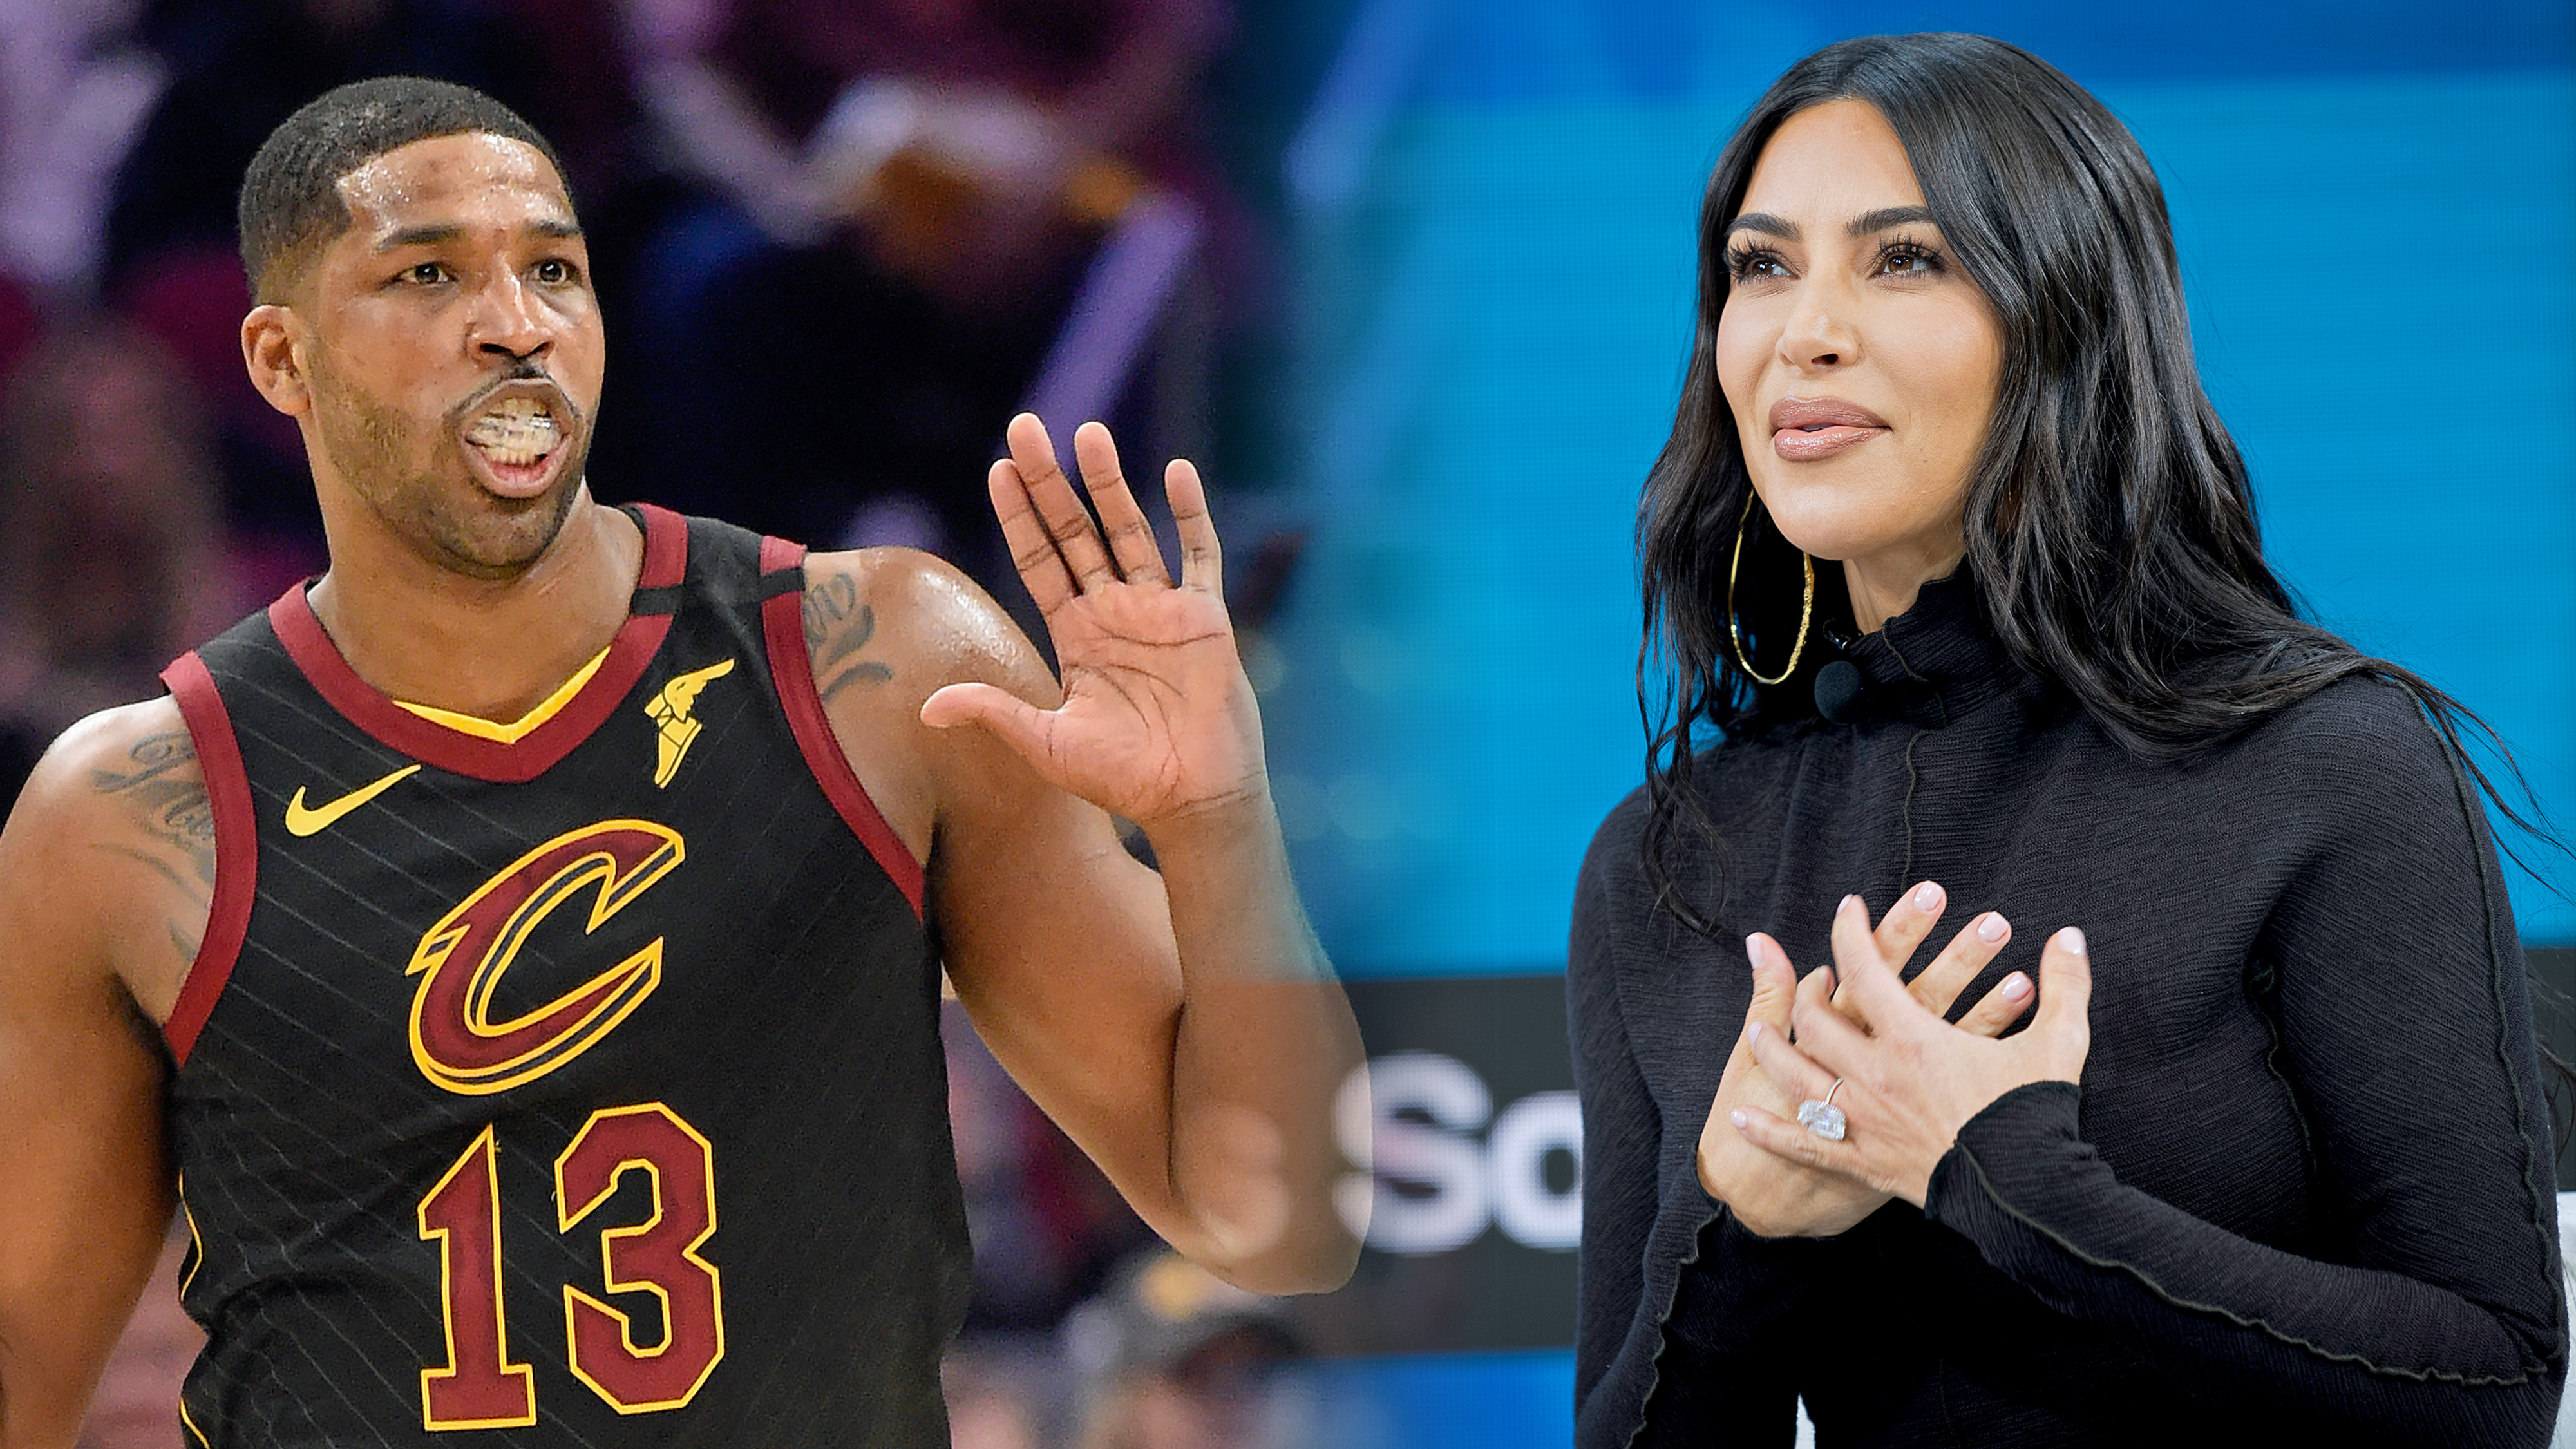 Kim Kardashian Congratulates Tristan Thompson On Celtics Deal: 'Boston Here We Come' â CBS Boston